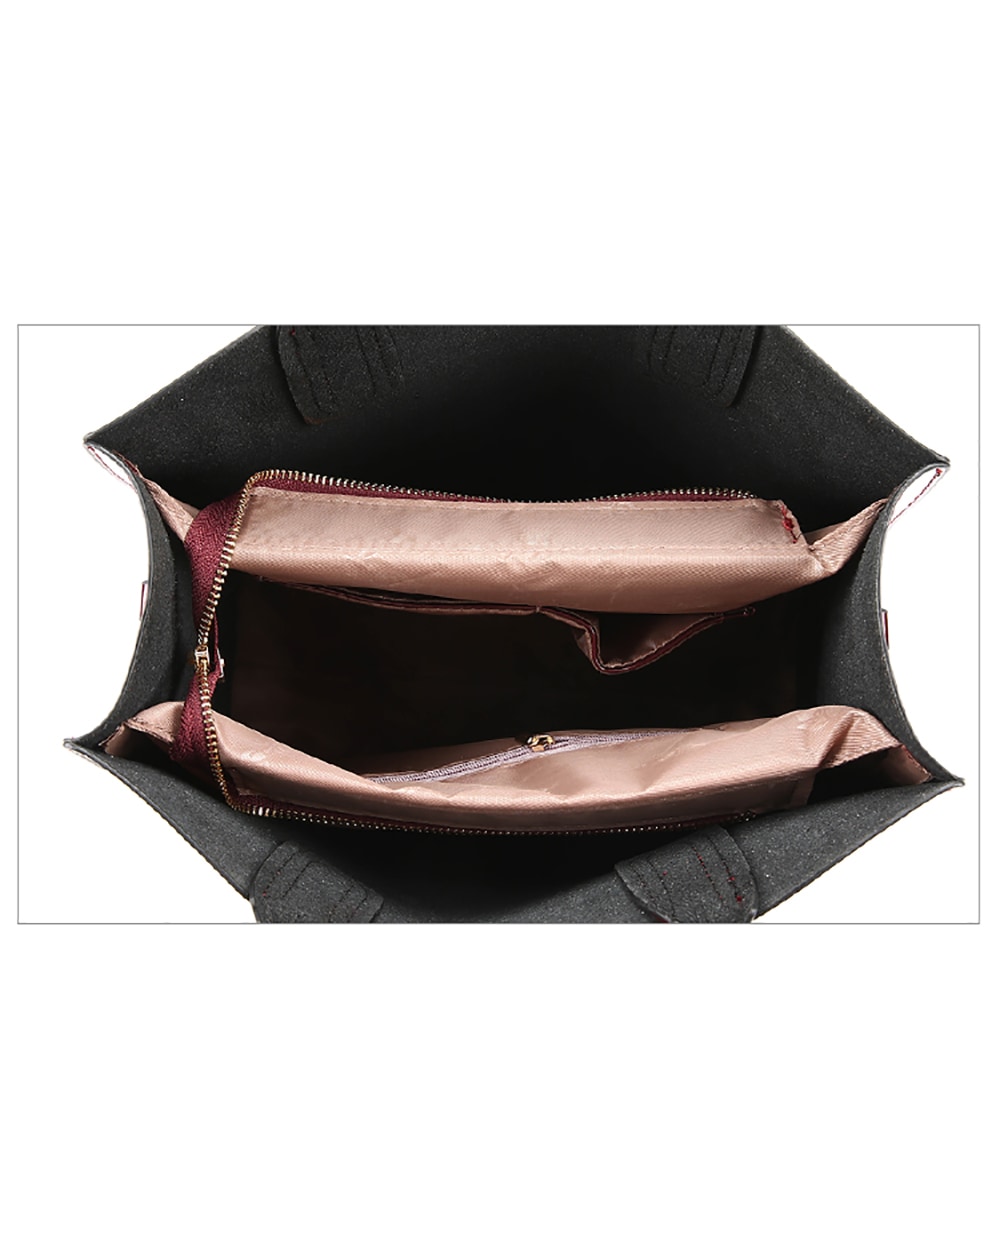 red glossy leather 3 piece women handbag - 9